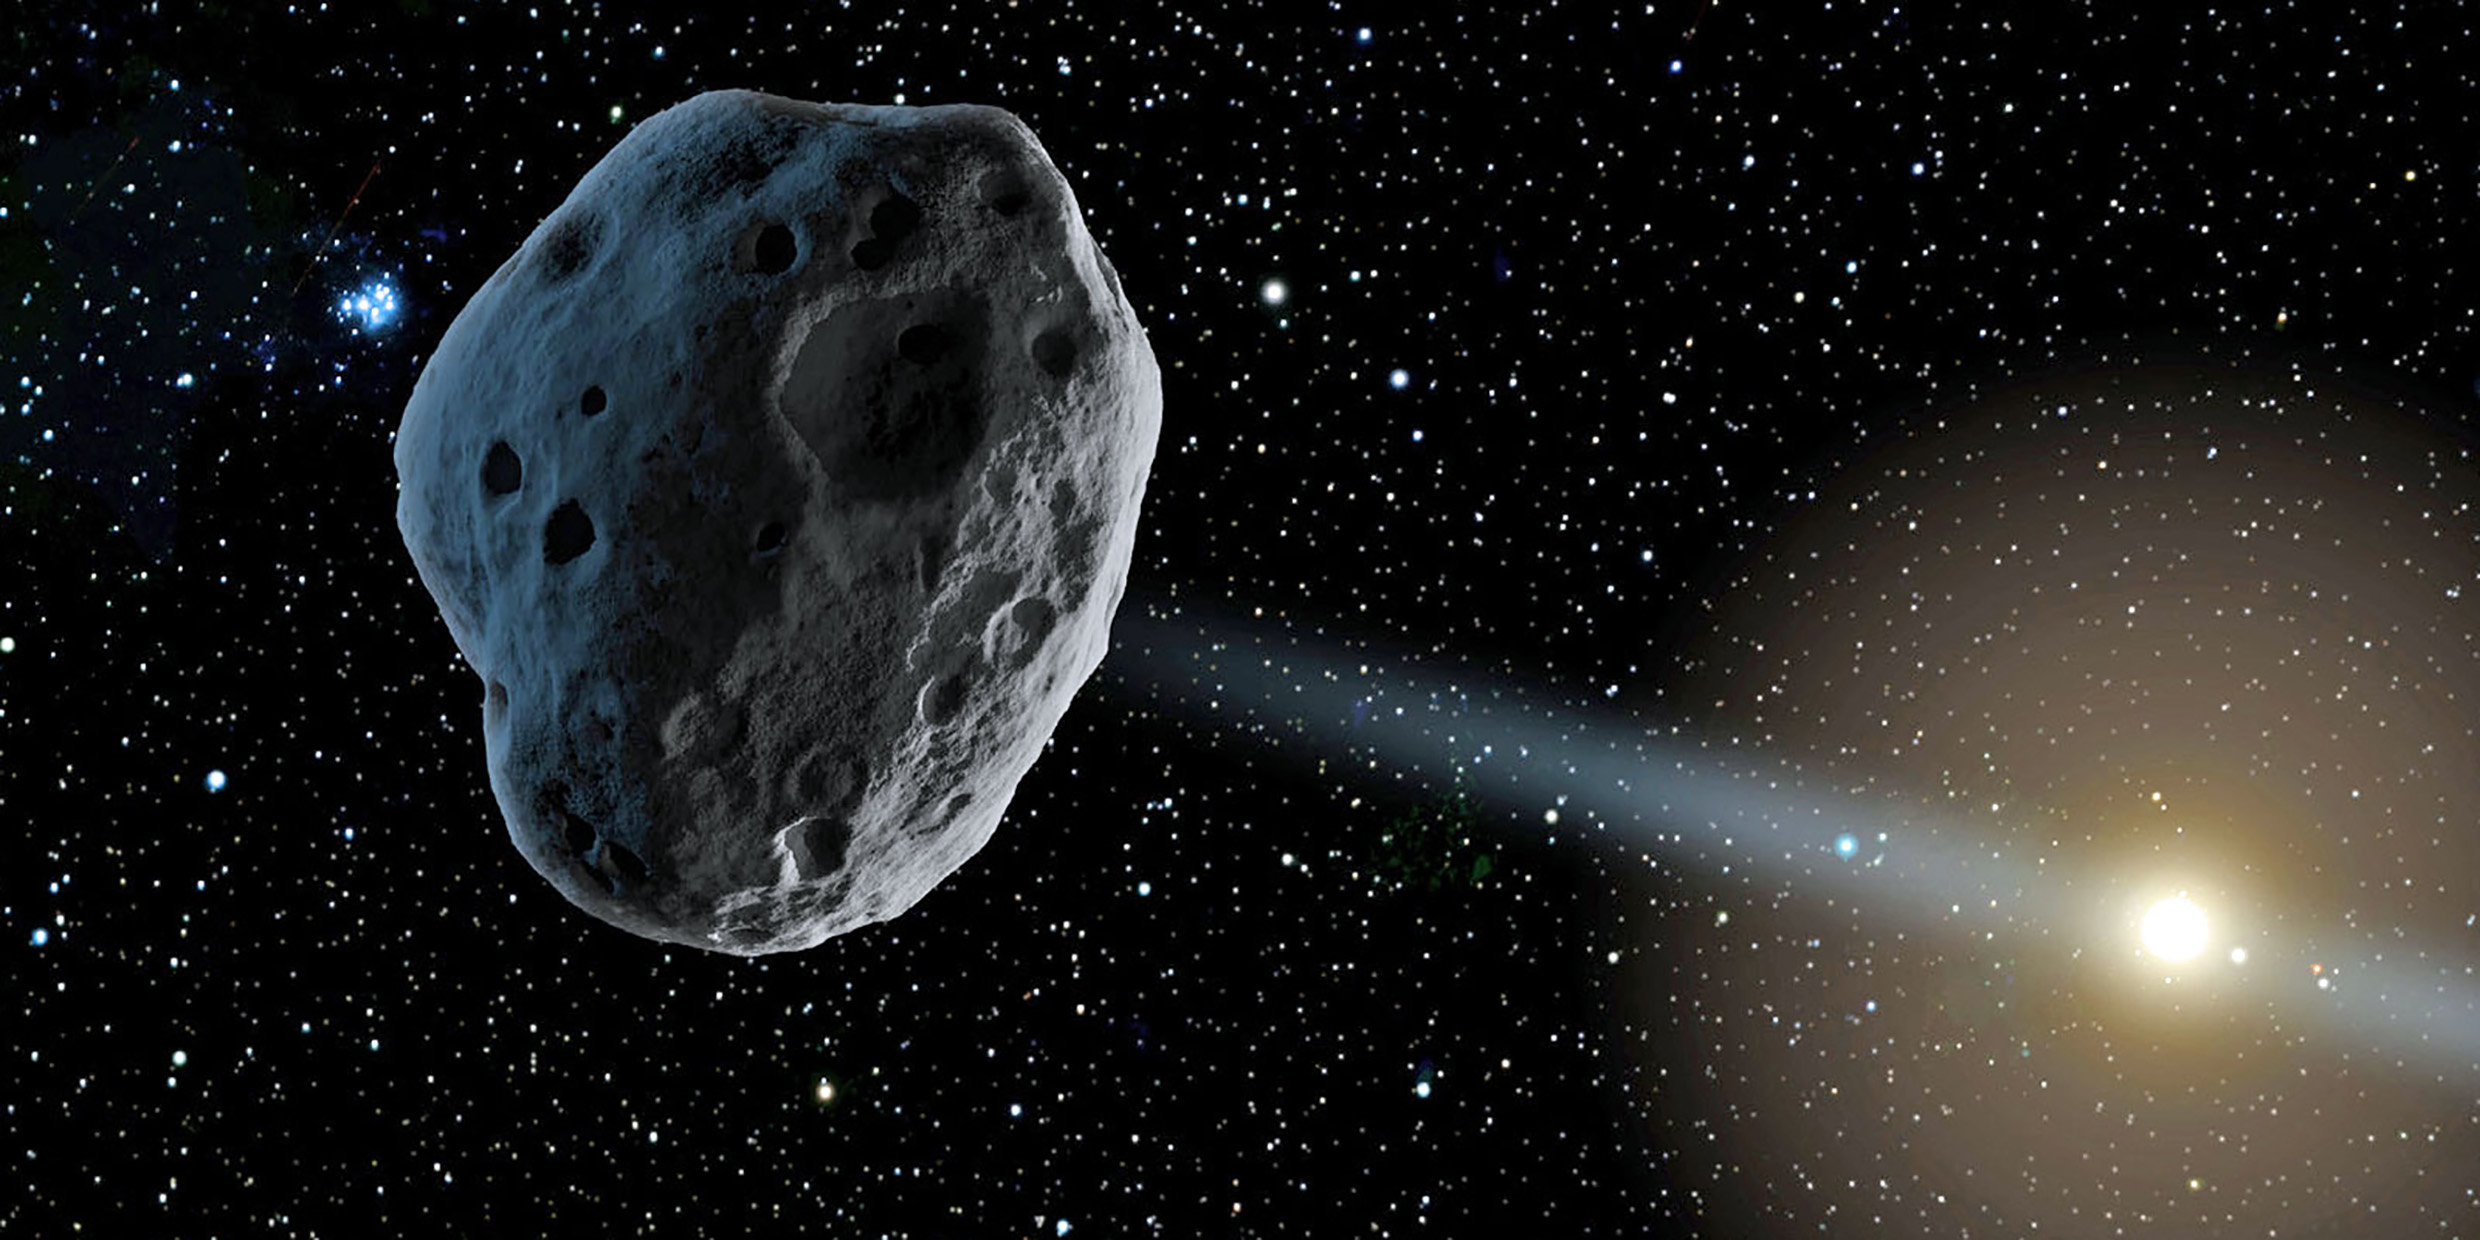 Artist's impression of asteroid